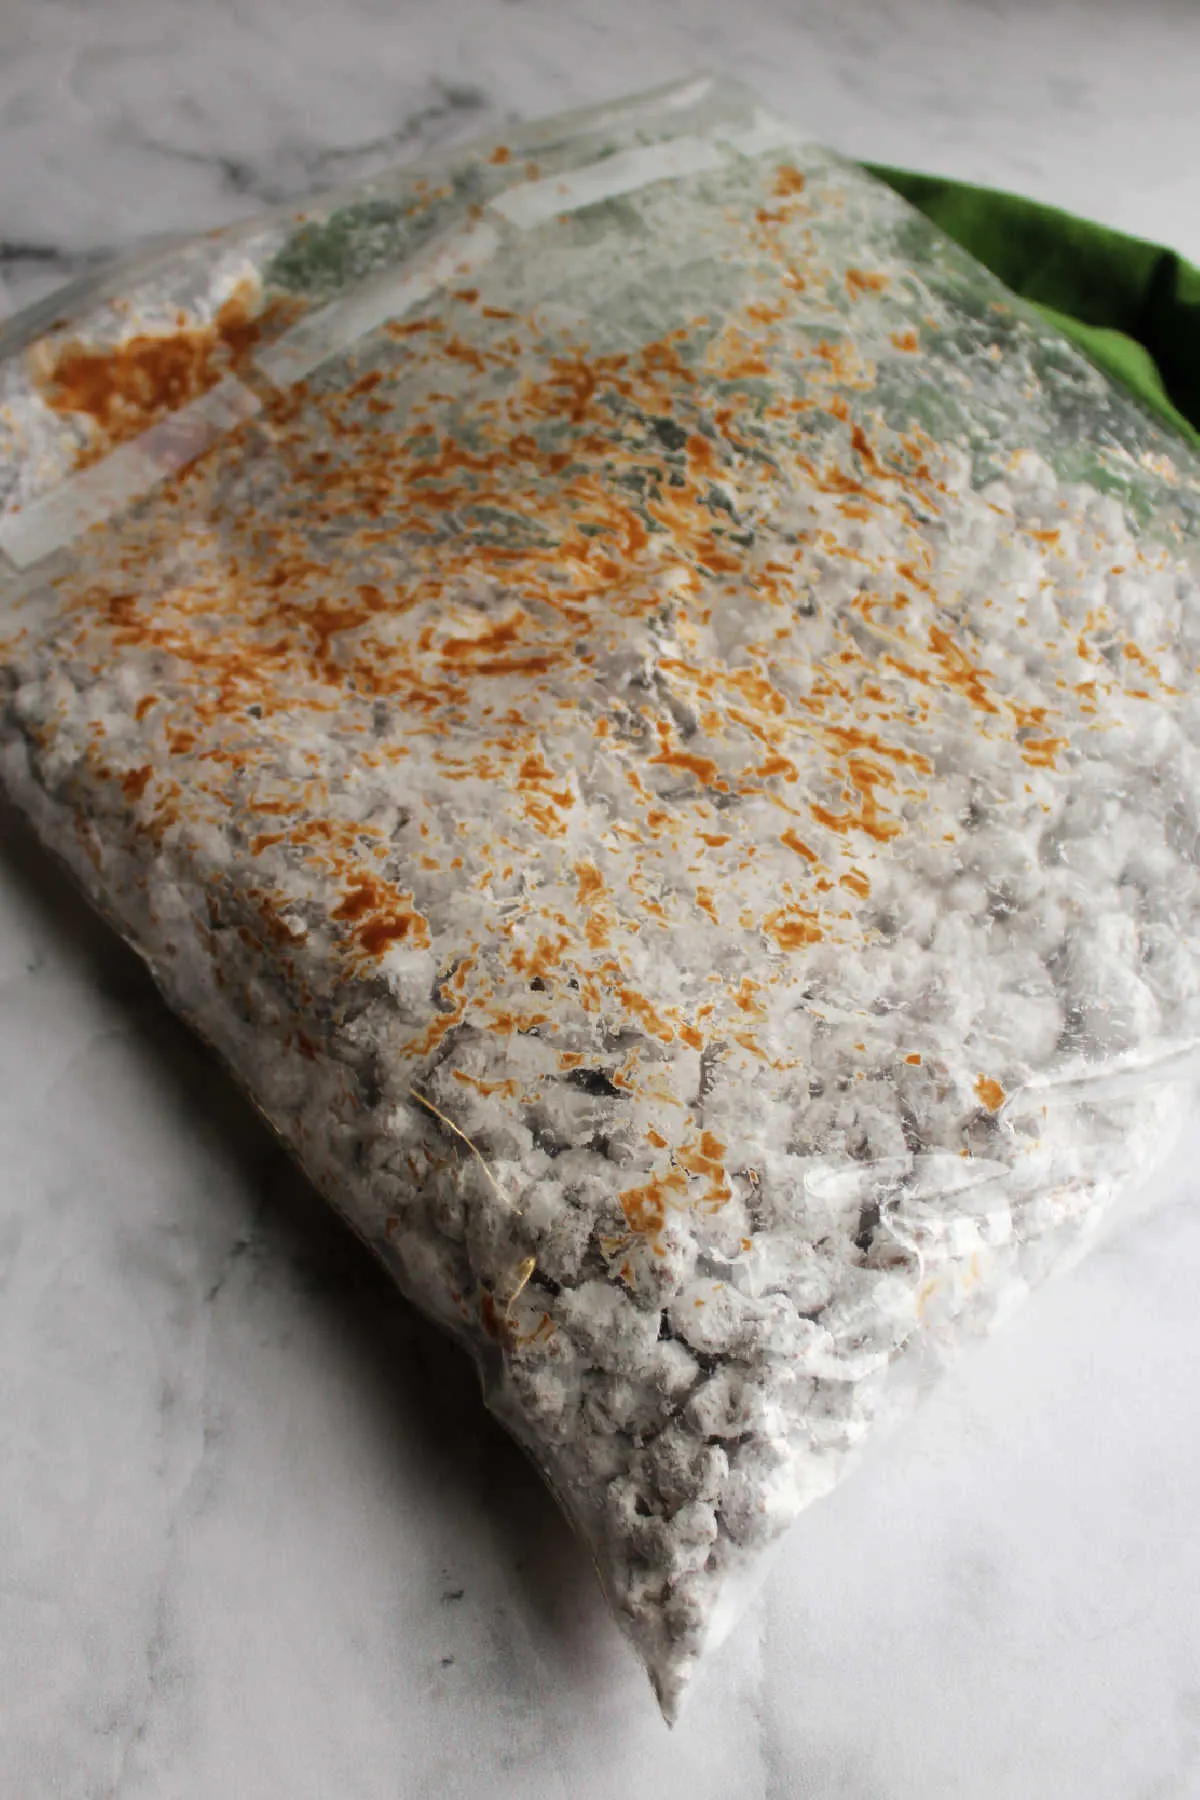 Big plastic bag with powdered sugar coated puppy chow popcorn.